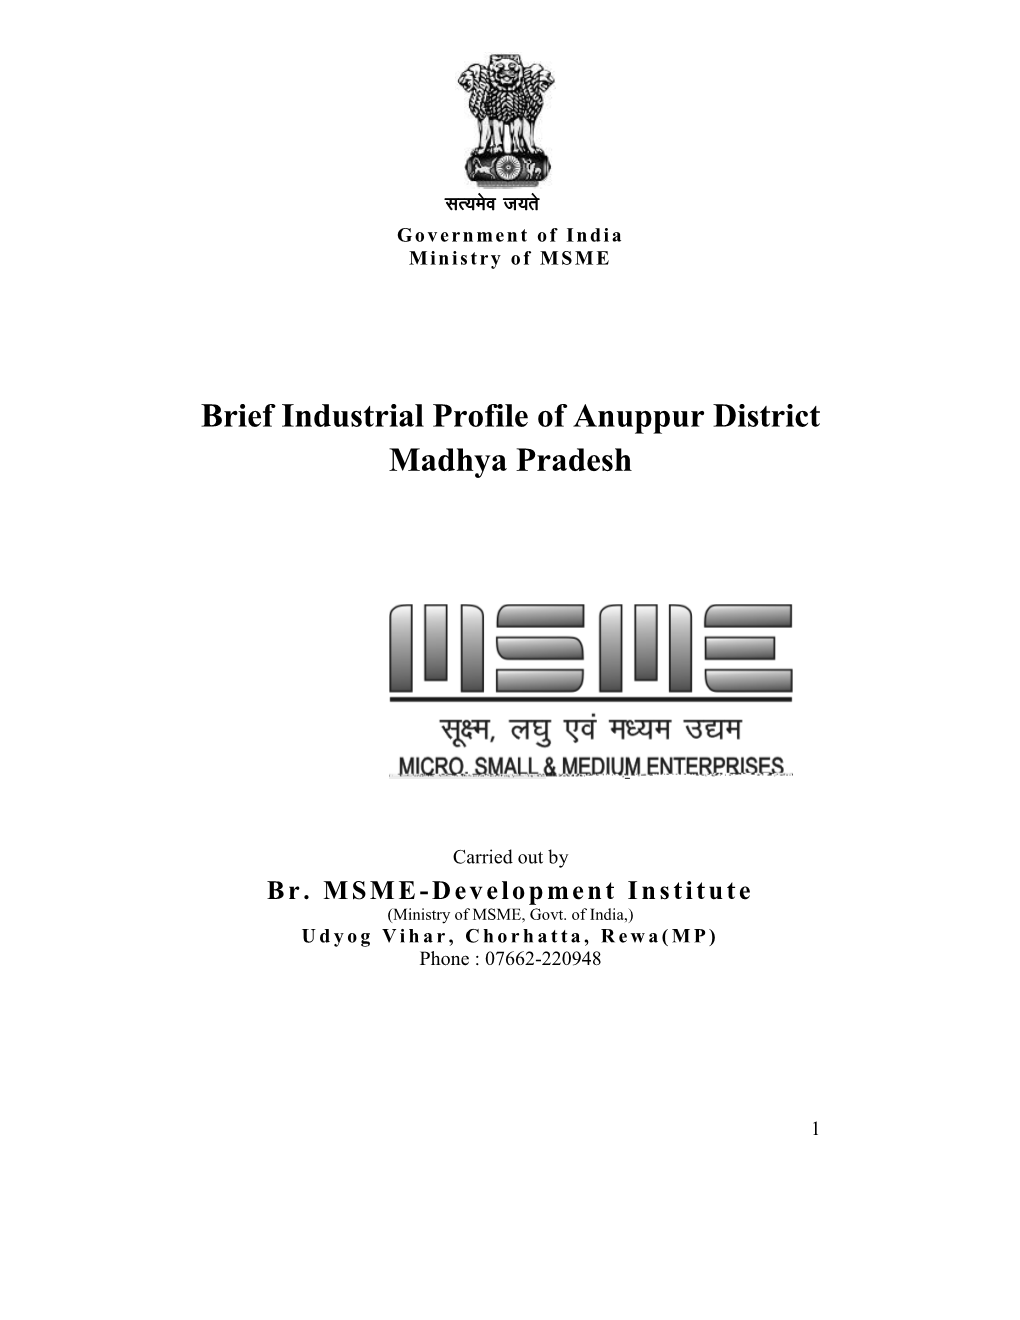 Brief Industrial Profile of Anuppur District Madhya Pradesh